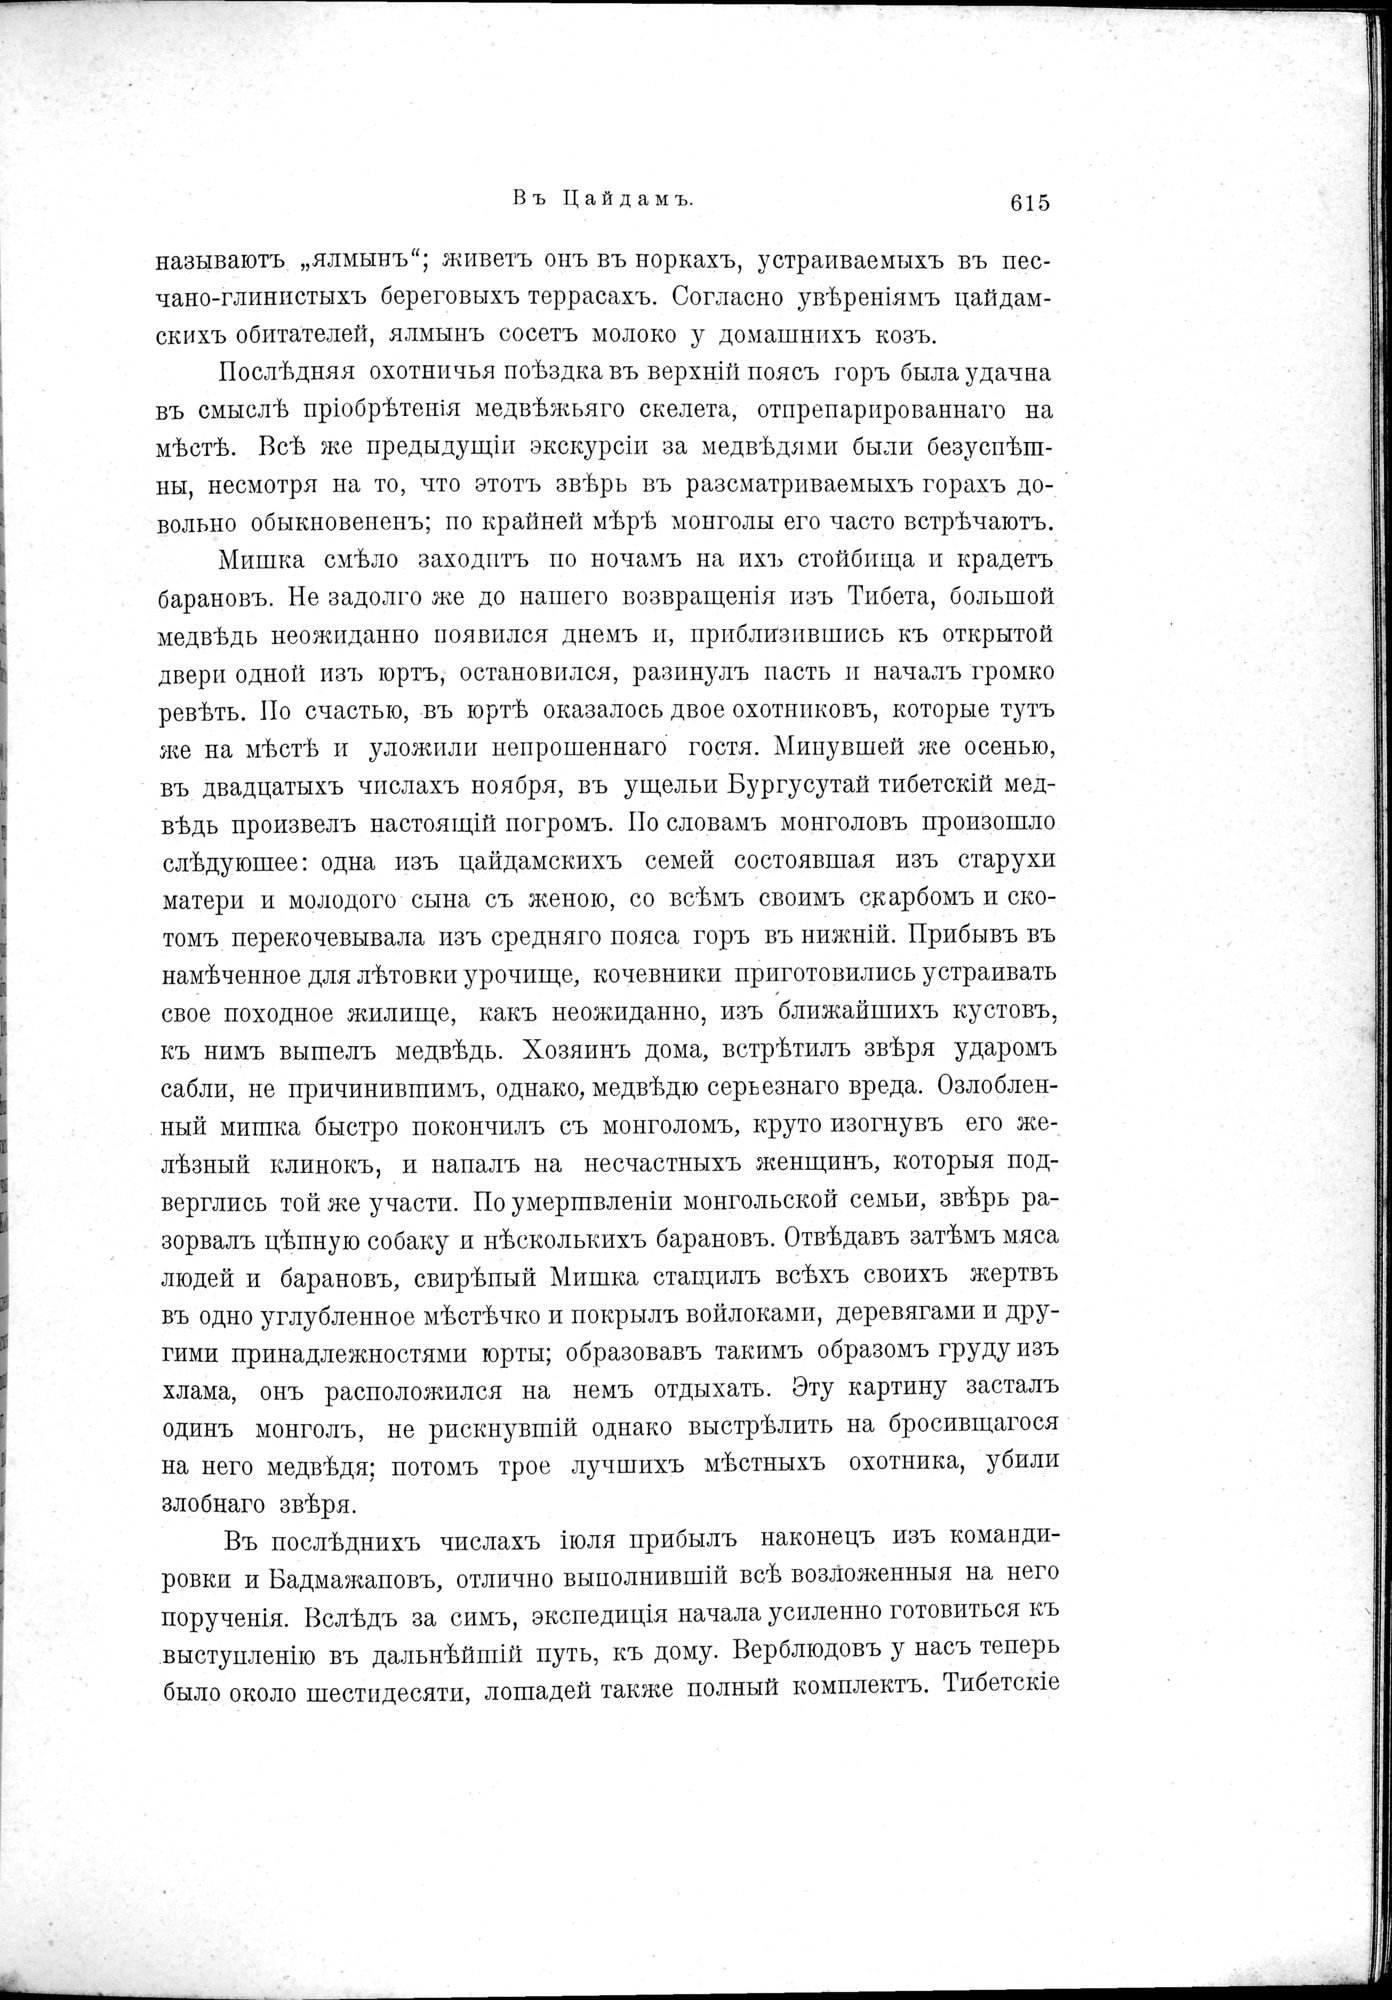 Mongoliia i Kam : vol.2 / Page 443 (Grayscale High Resolution Image)